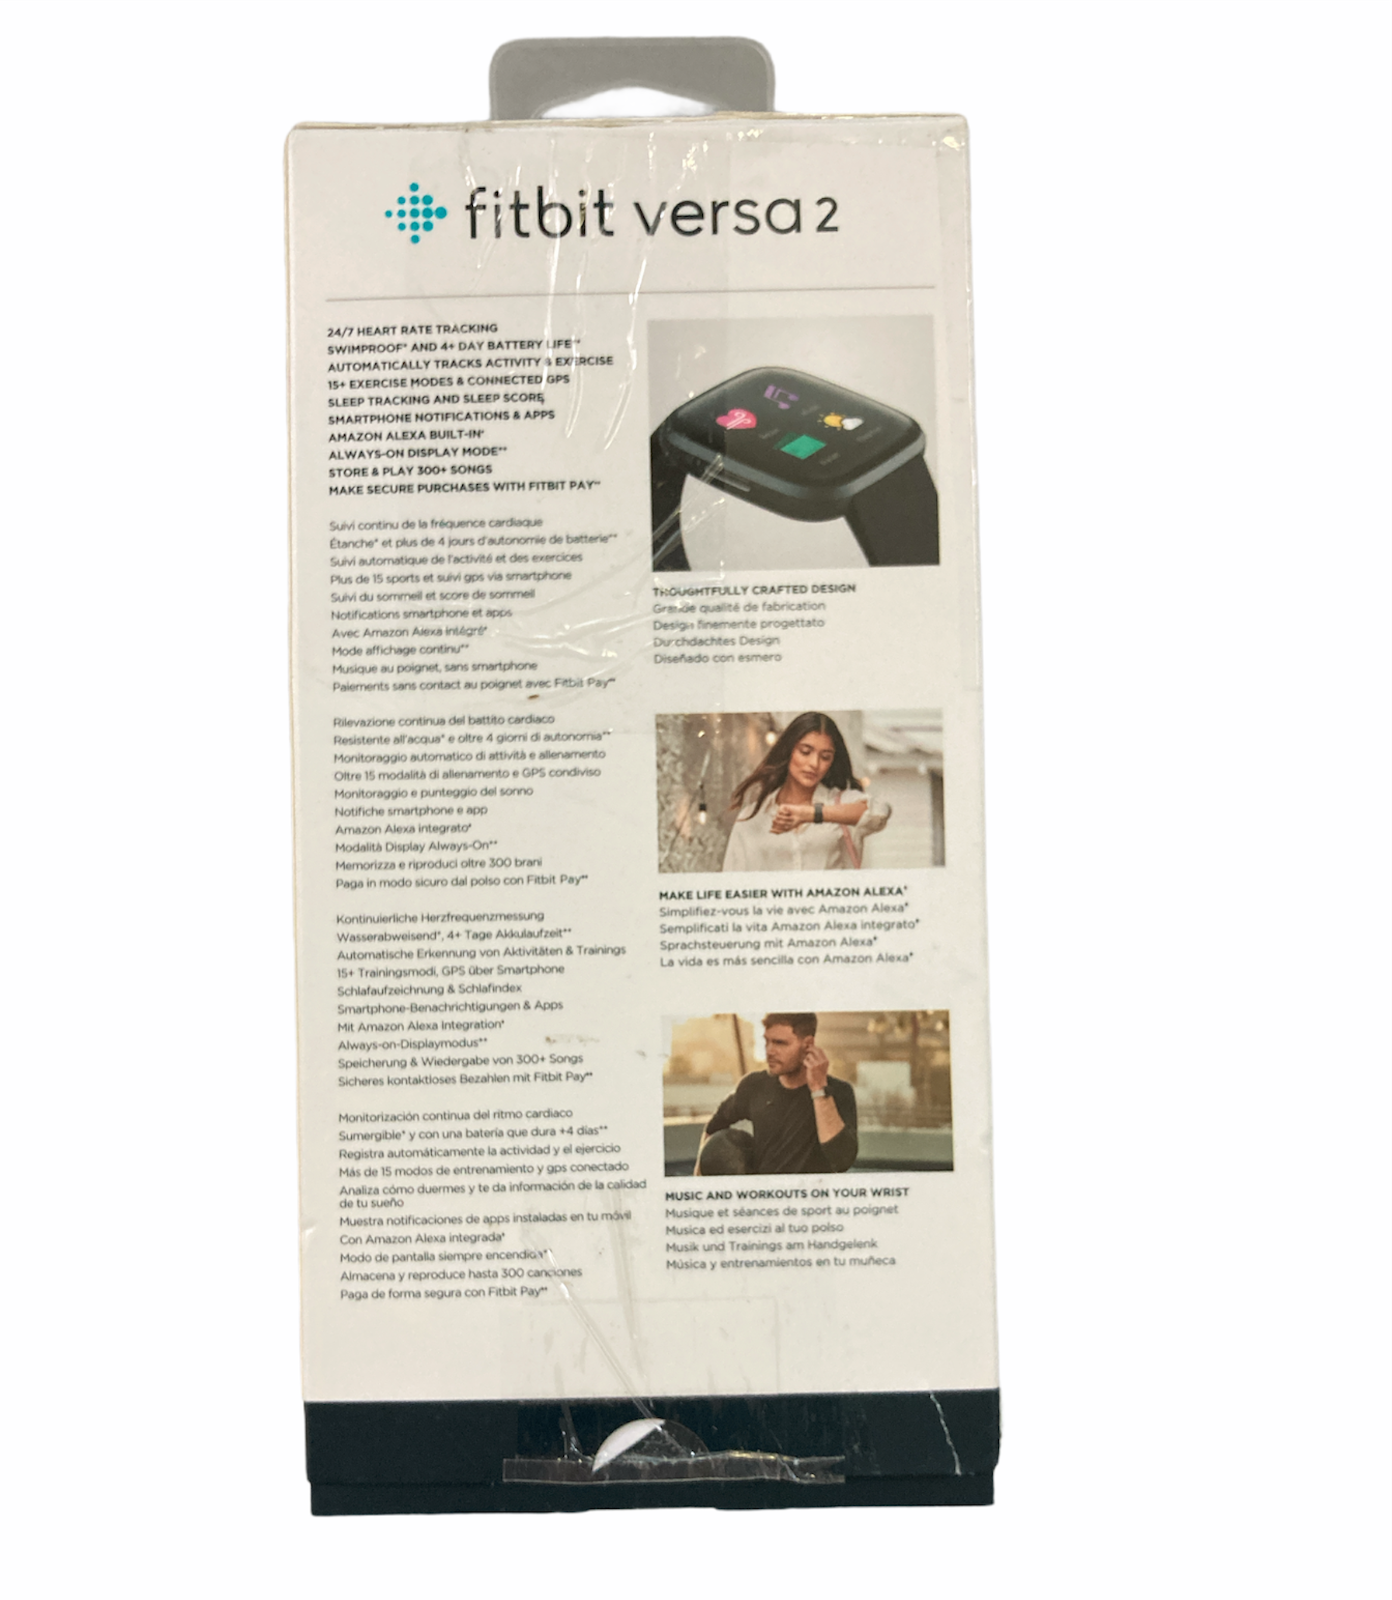 Fitbit Versa 2 Health & Fitness Smartwatch (FB507BKBK) Black